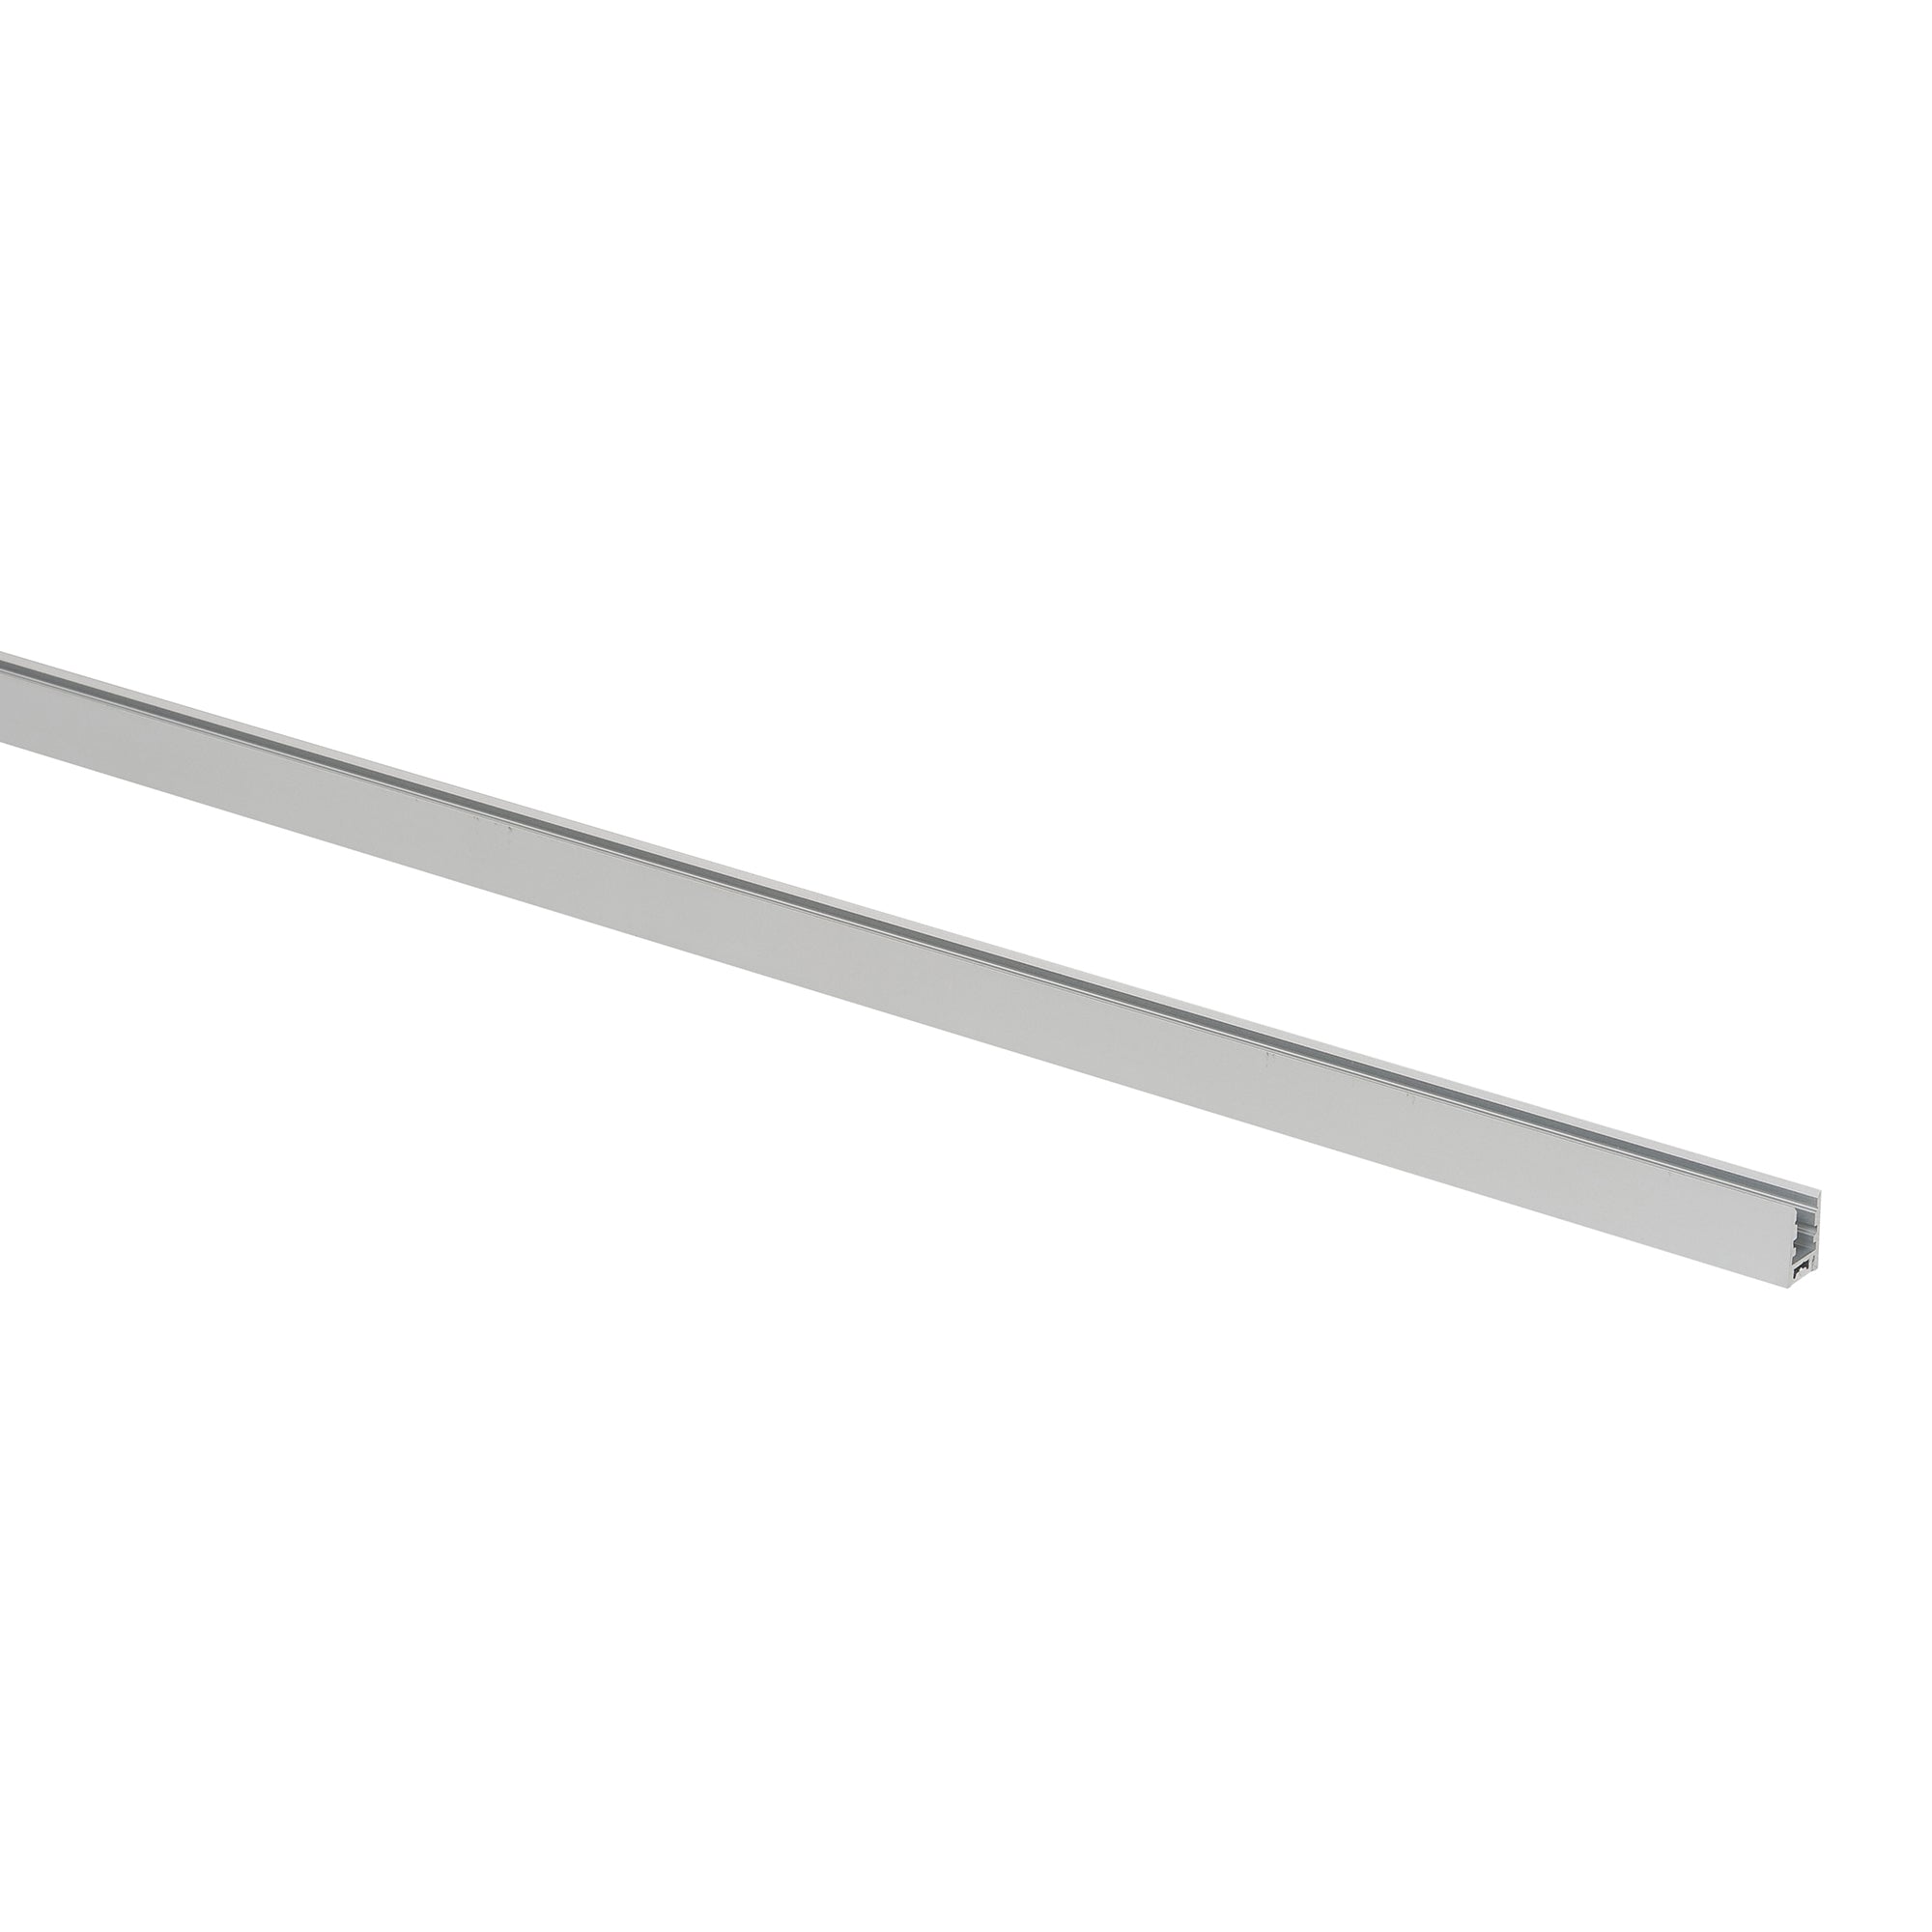 HV9792-ALU - Aluminium Channel to suit HV9792 Flexible Side Bend Neon LED Strip